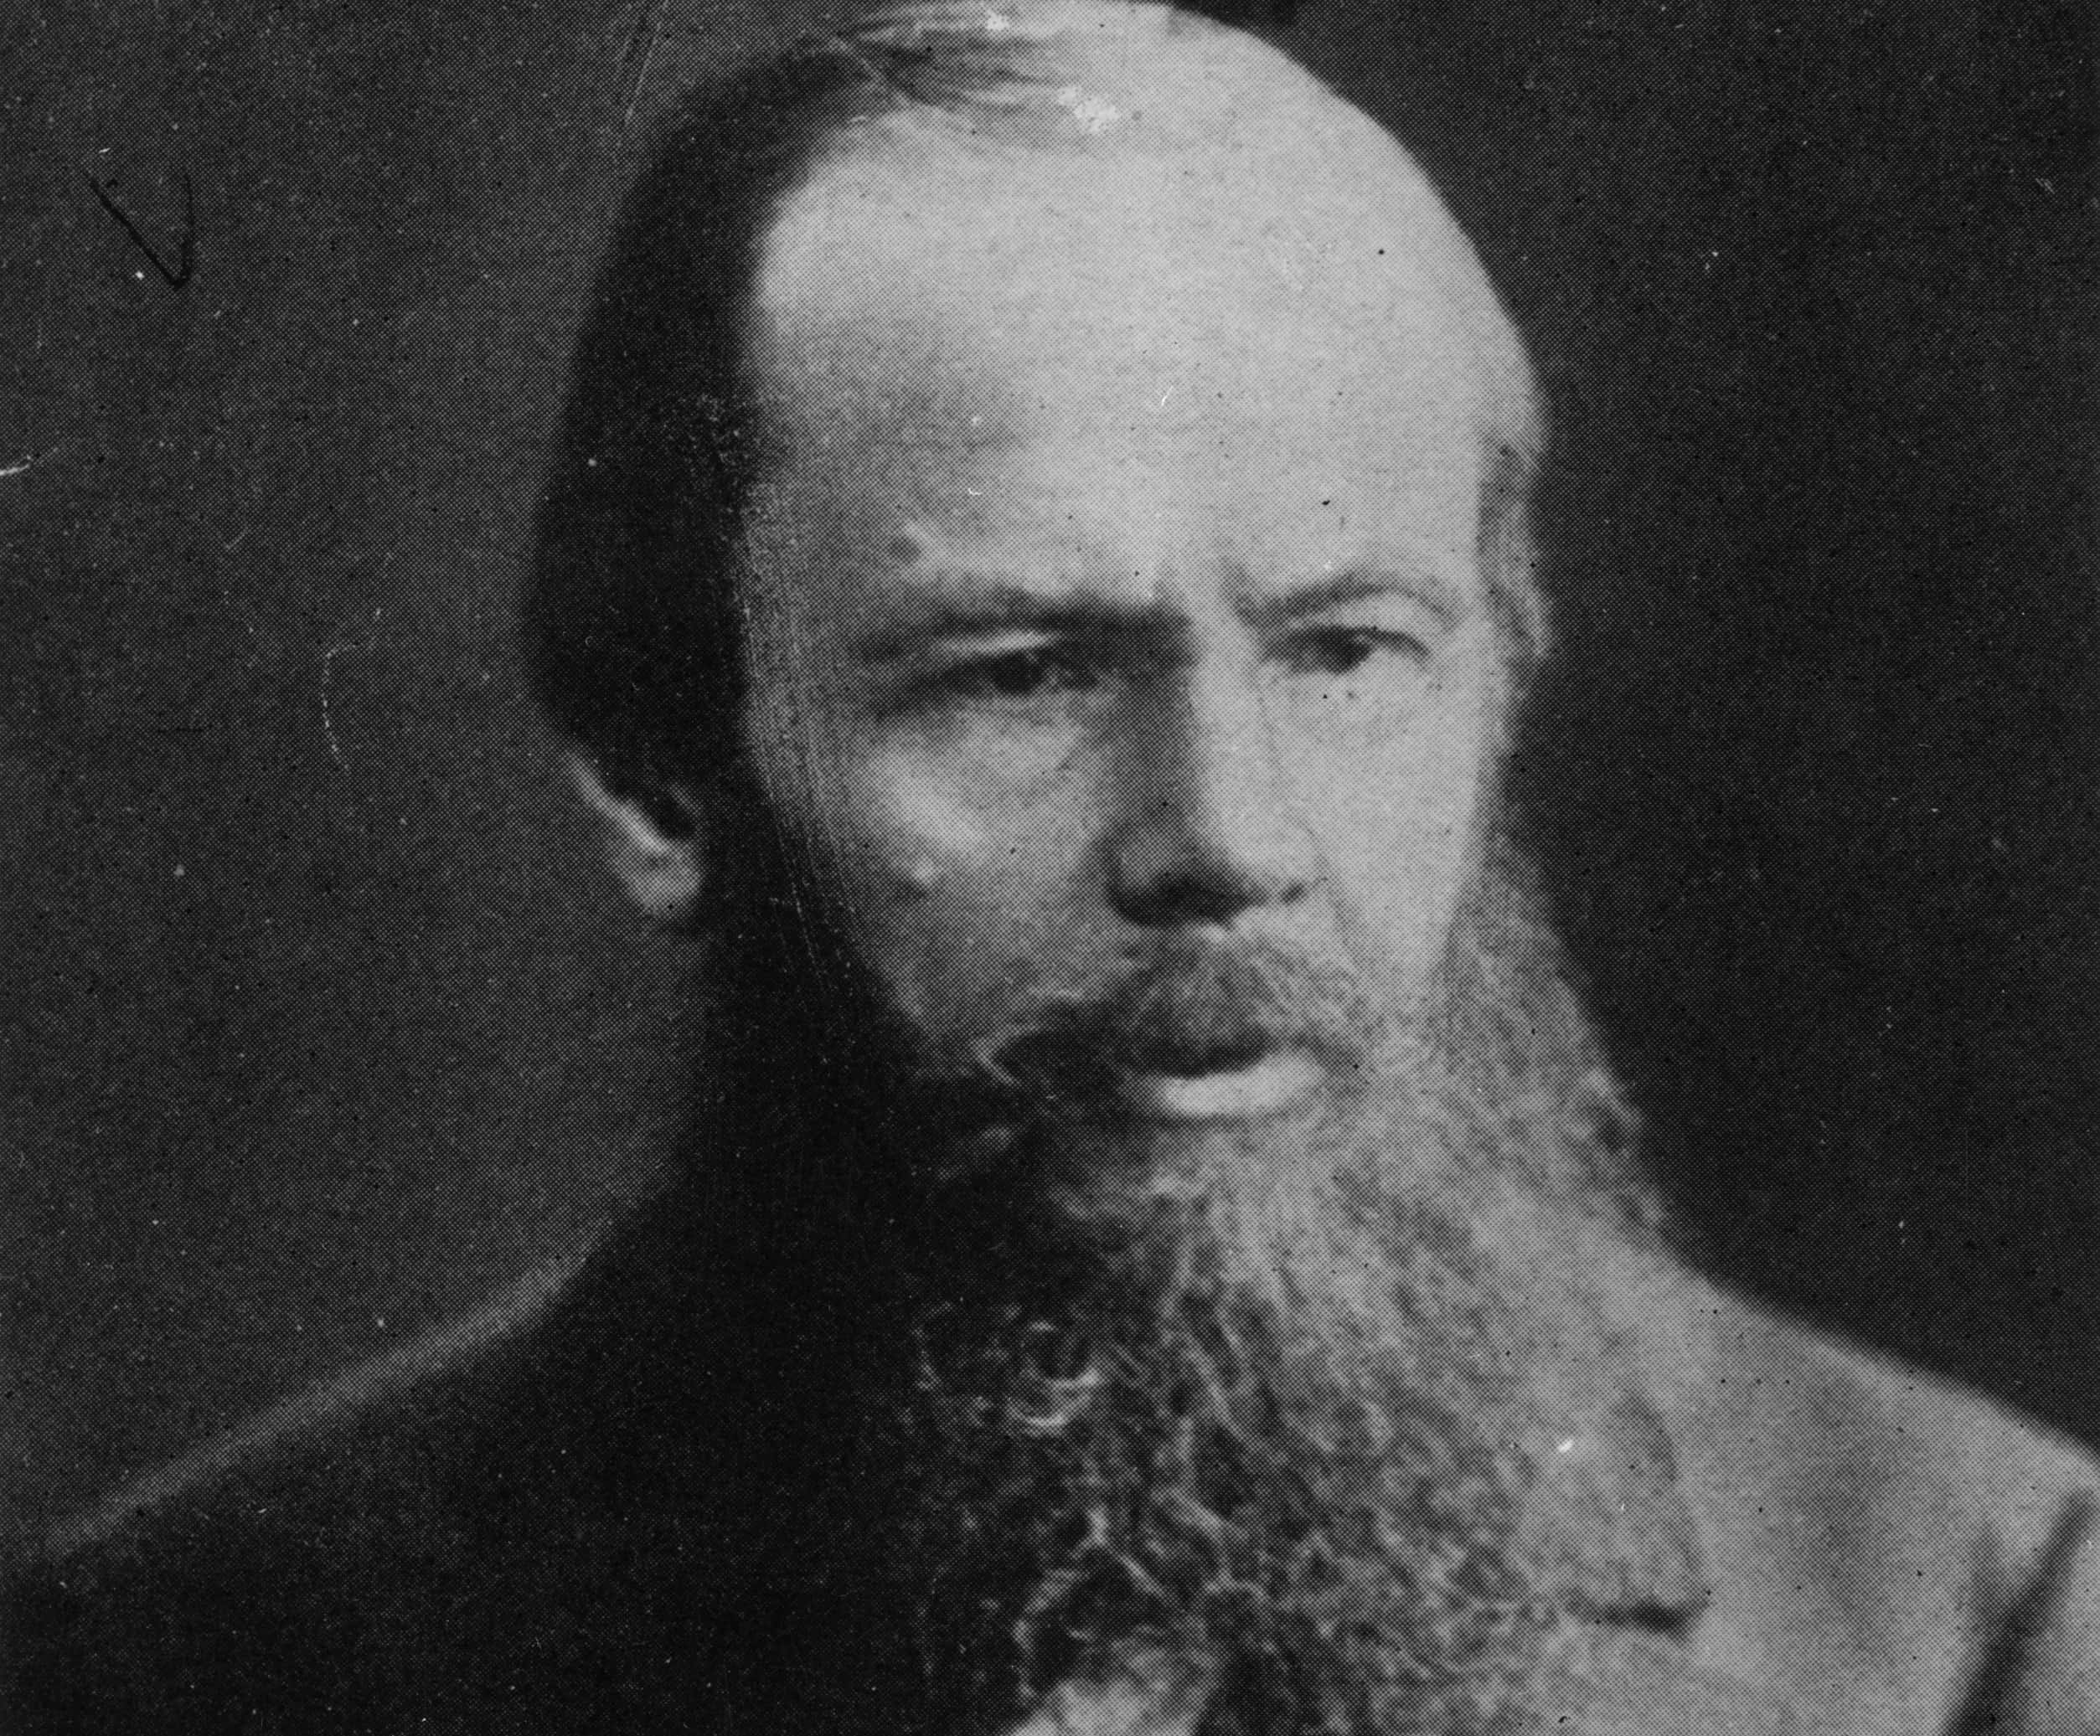 Fyodor Dostoevsky facts